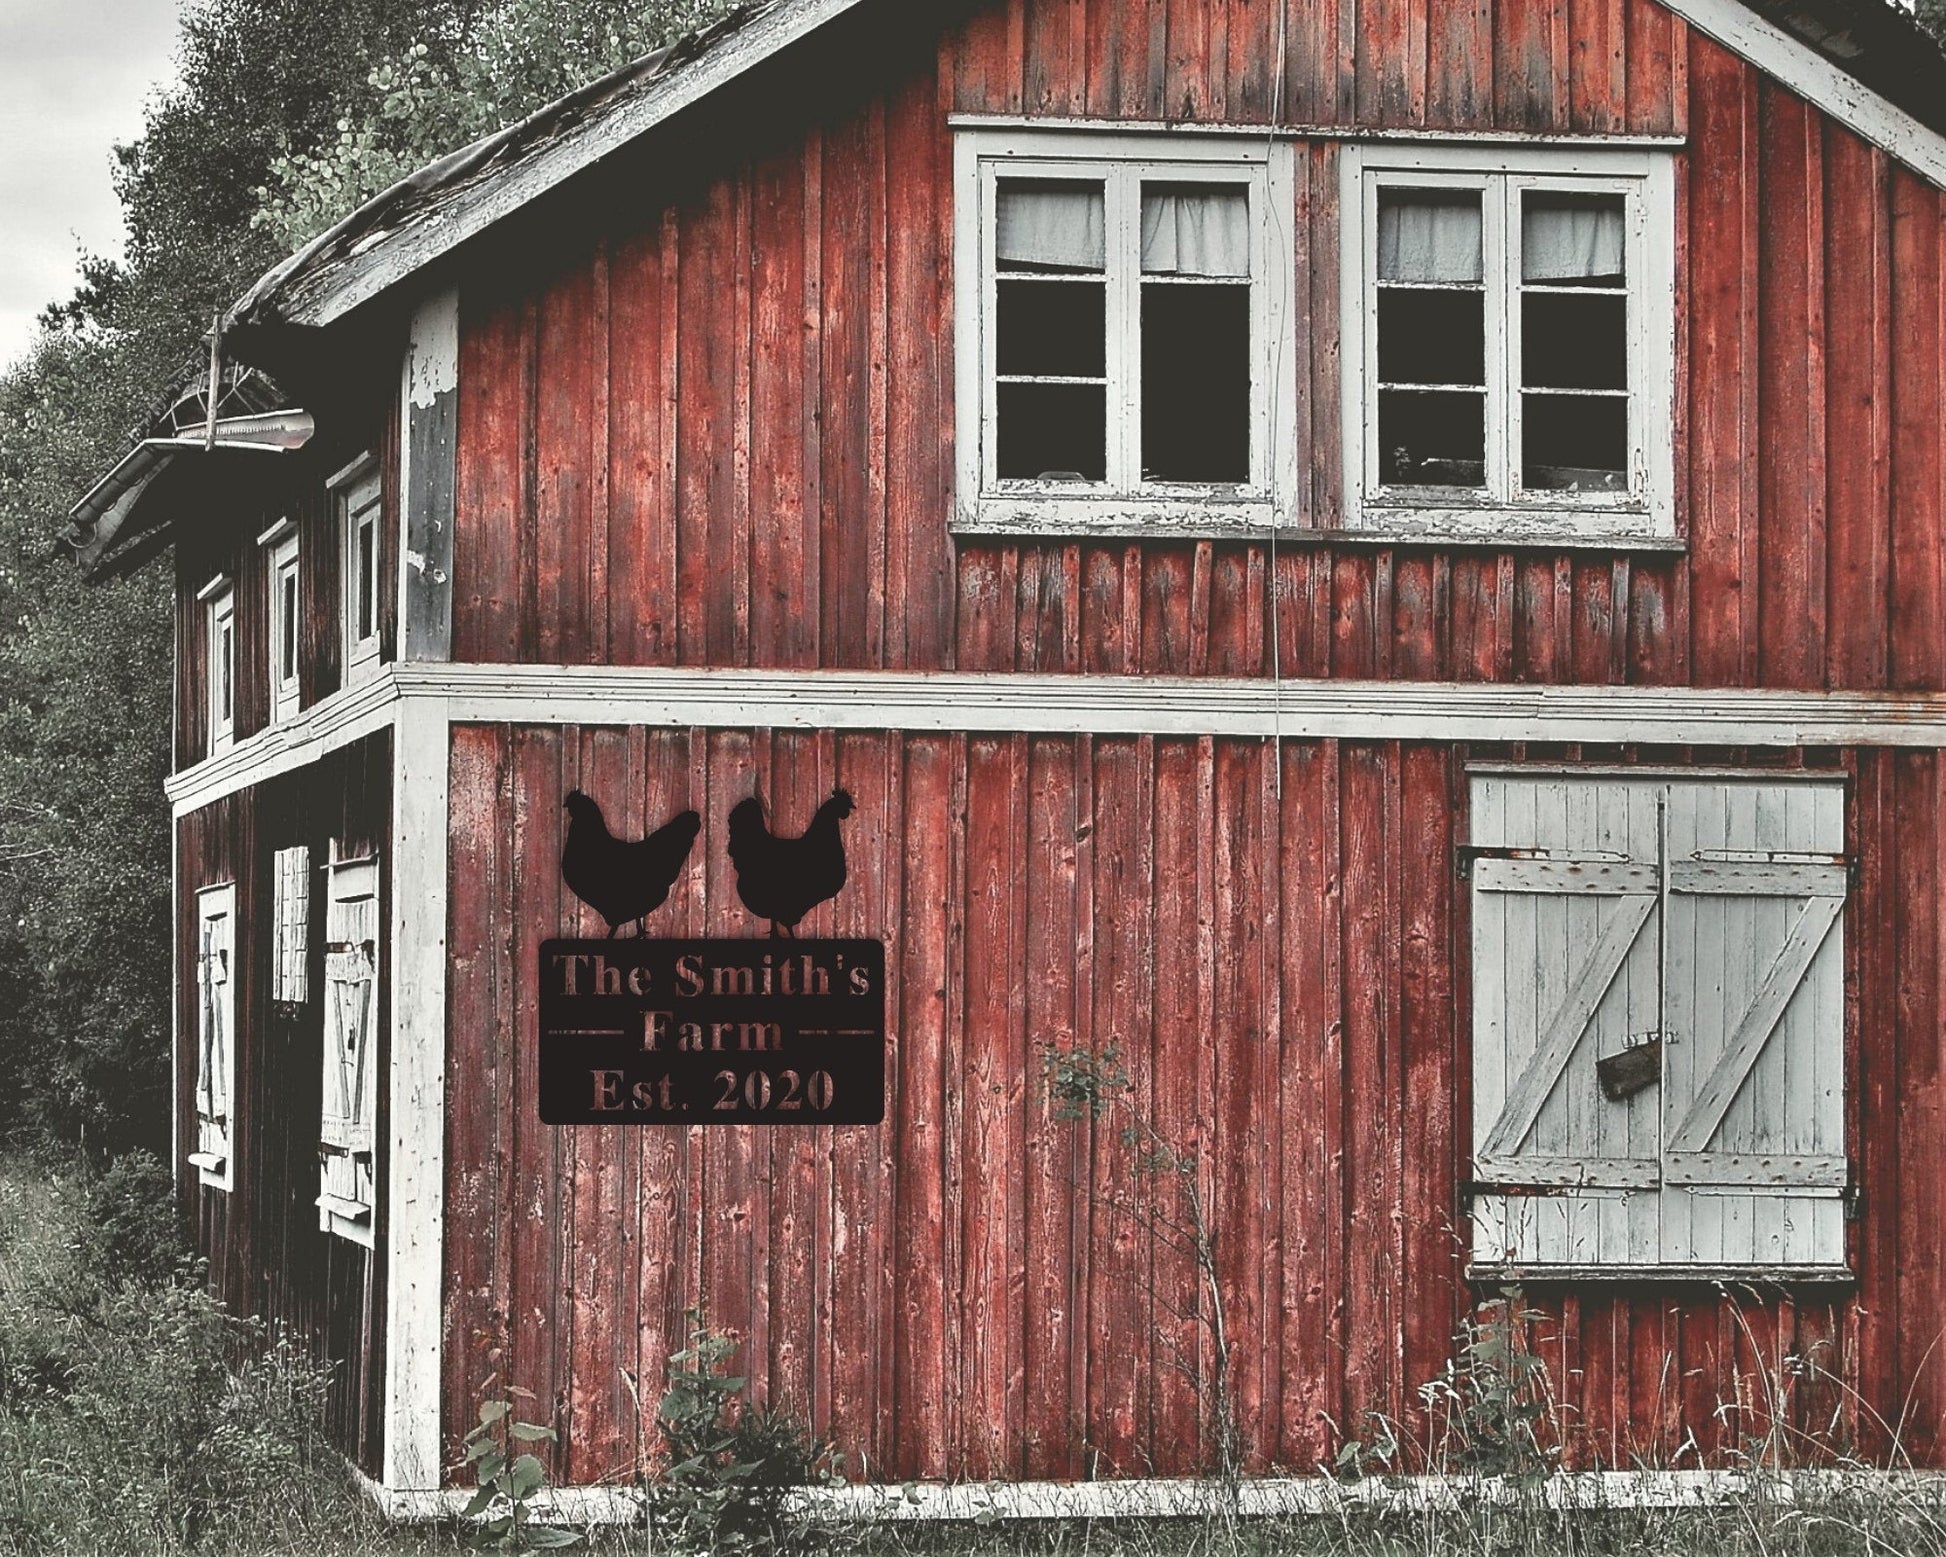 Custom Chicken Farm Metal Sign - Personalized Farm Metal Sign - Barn Sign - Ranch Sign